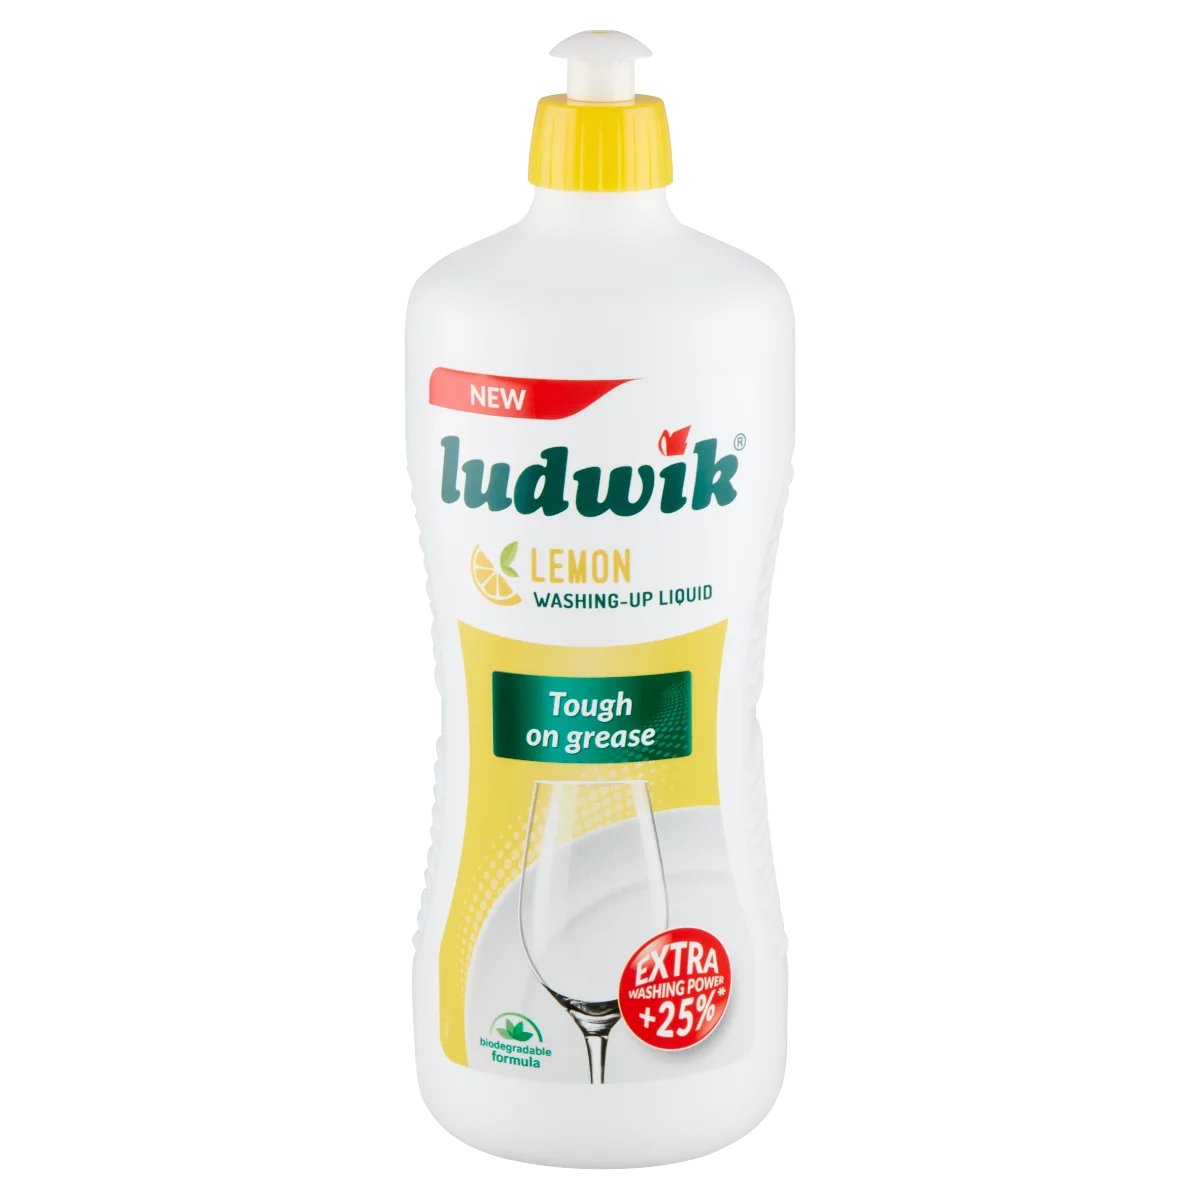 Ludwik citrom illatú mosogatószer 900 g